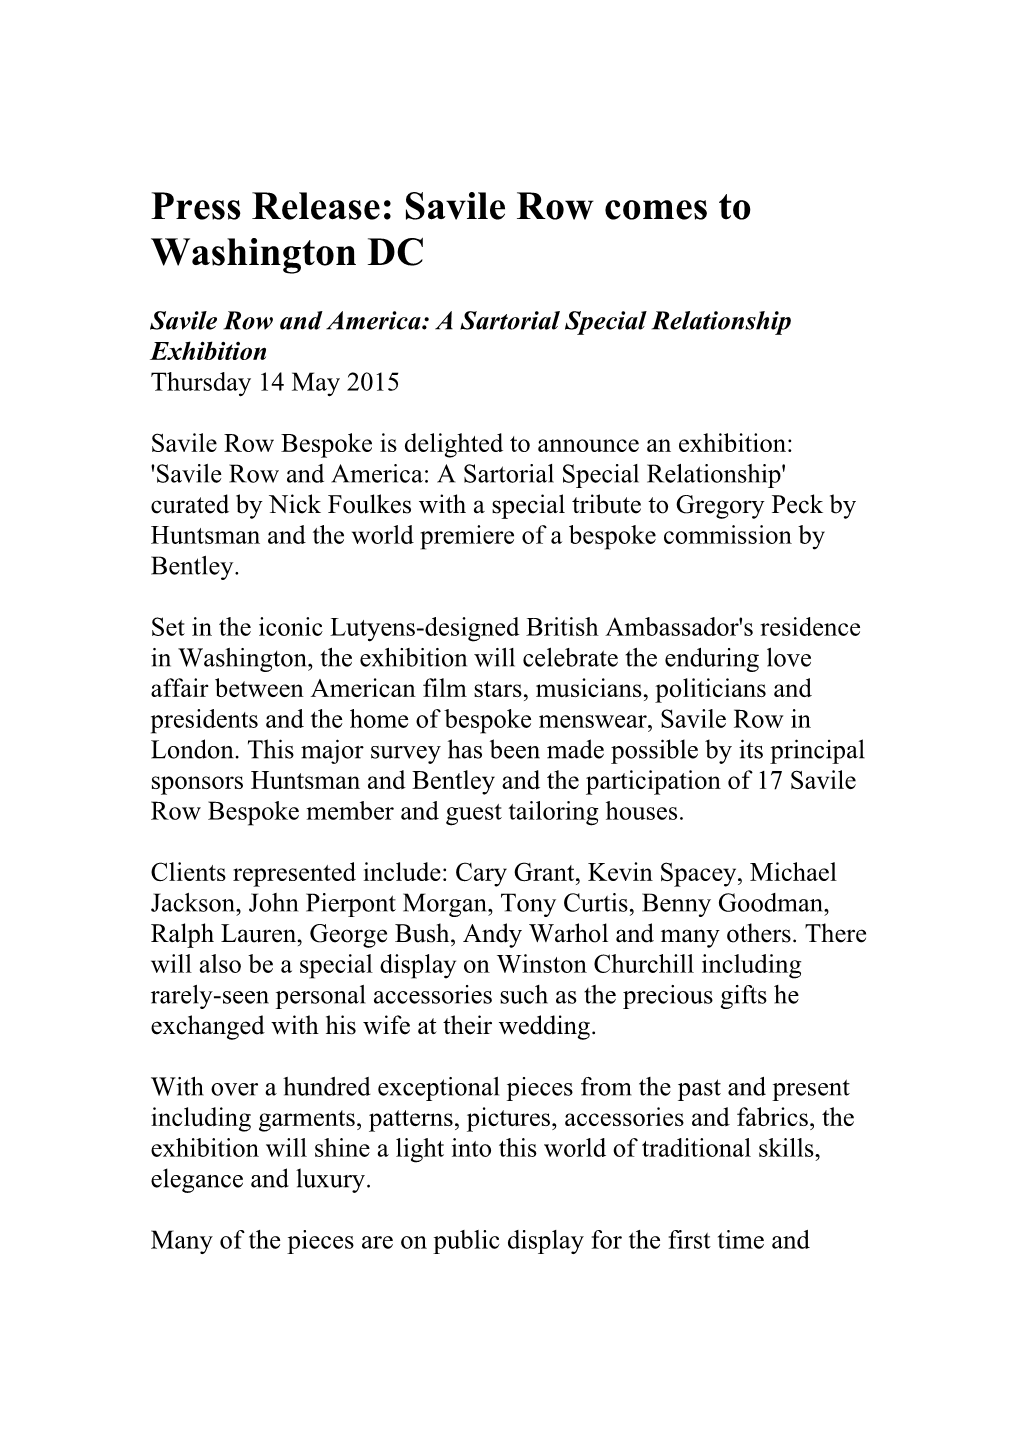 Press Release: Savile Row Comes to Washington DC